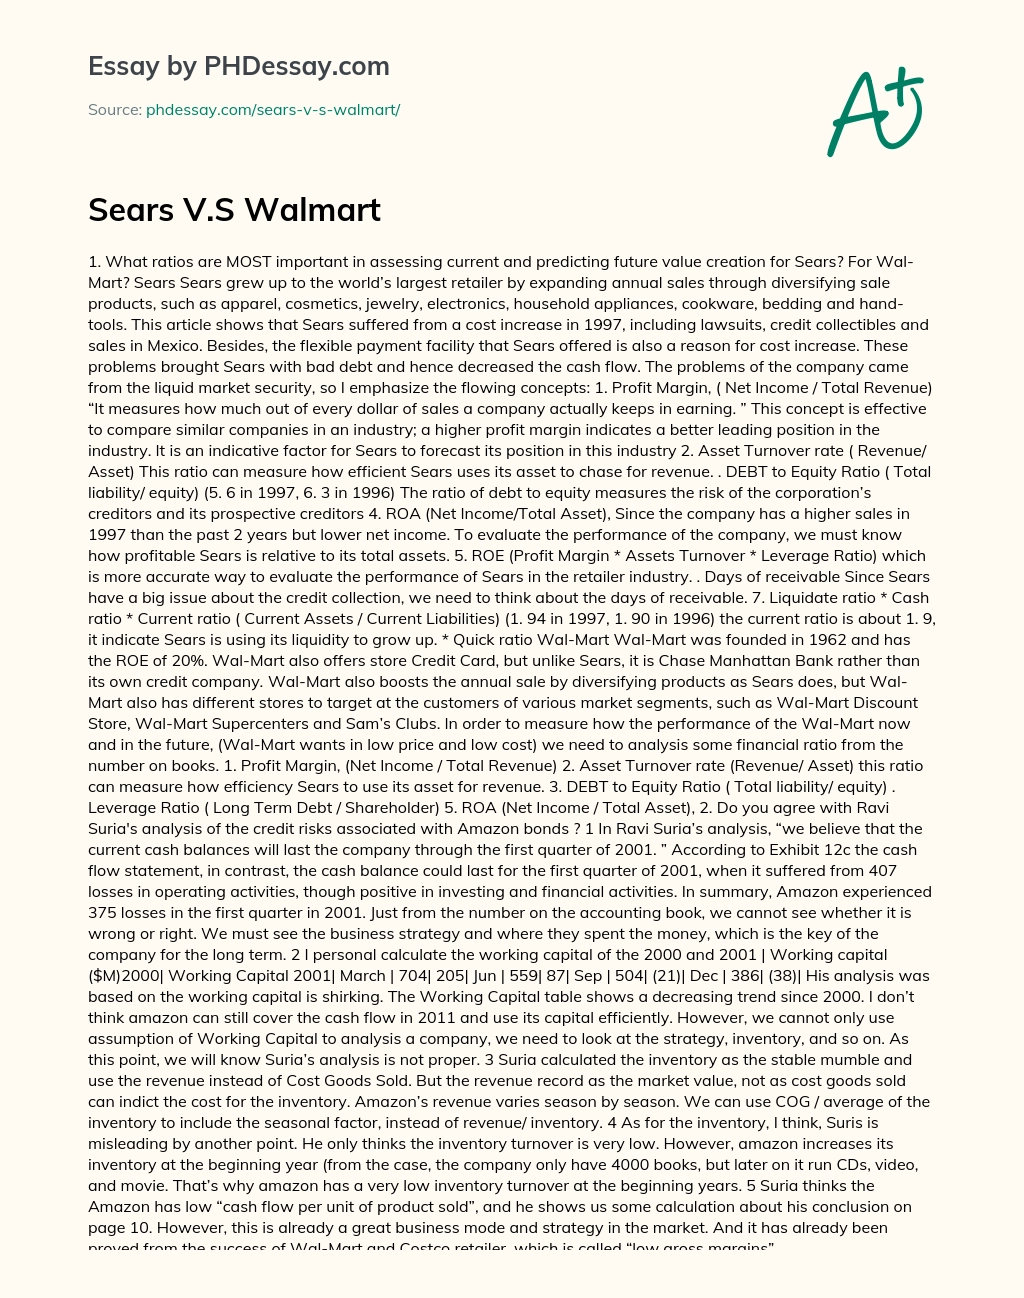 Sears V.S Walmart essay